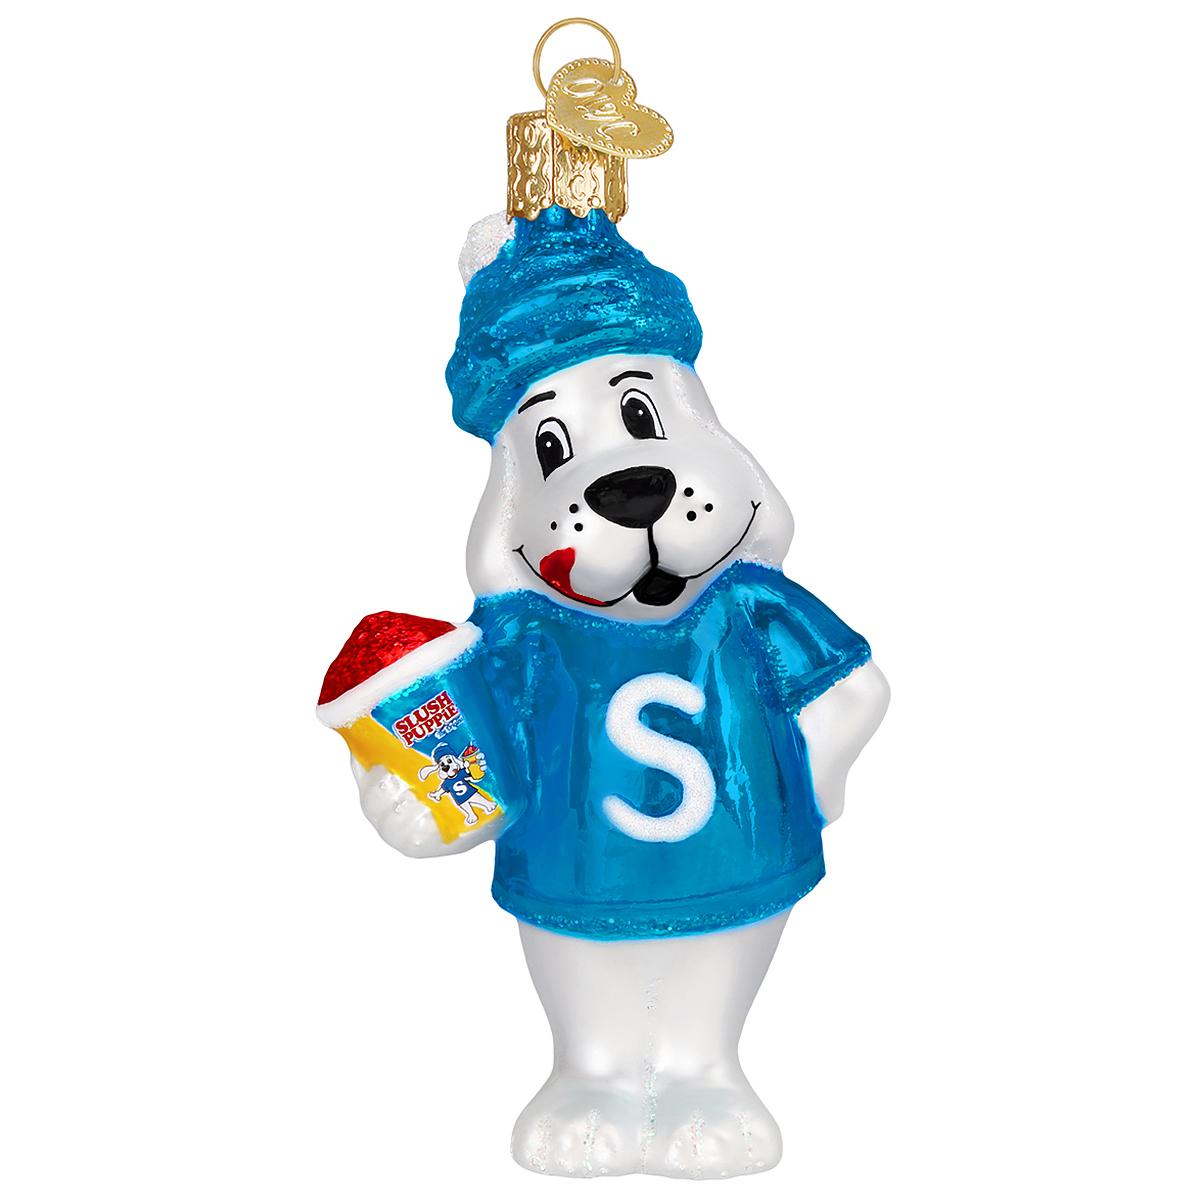 Slush Puppie Glass Ornament